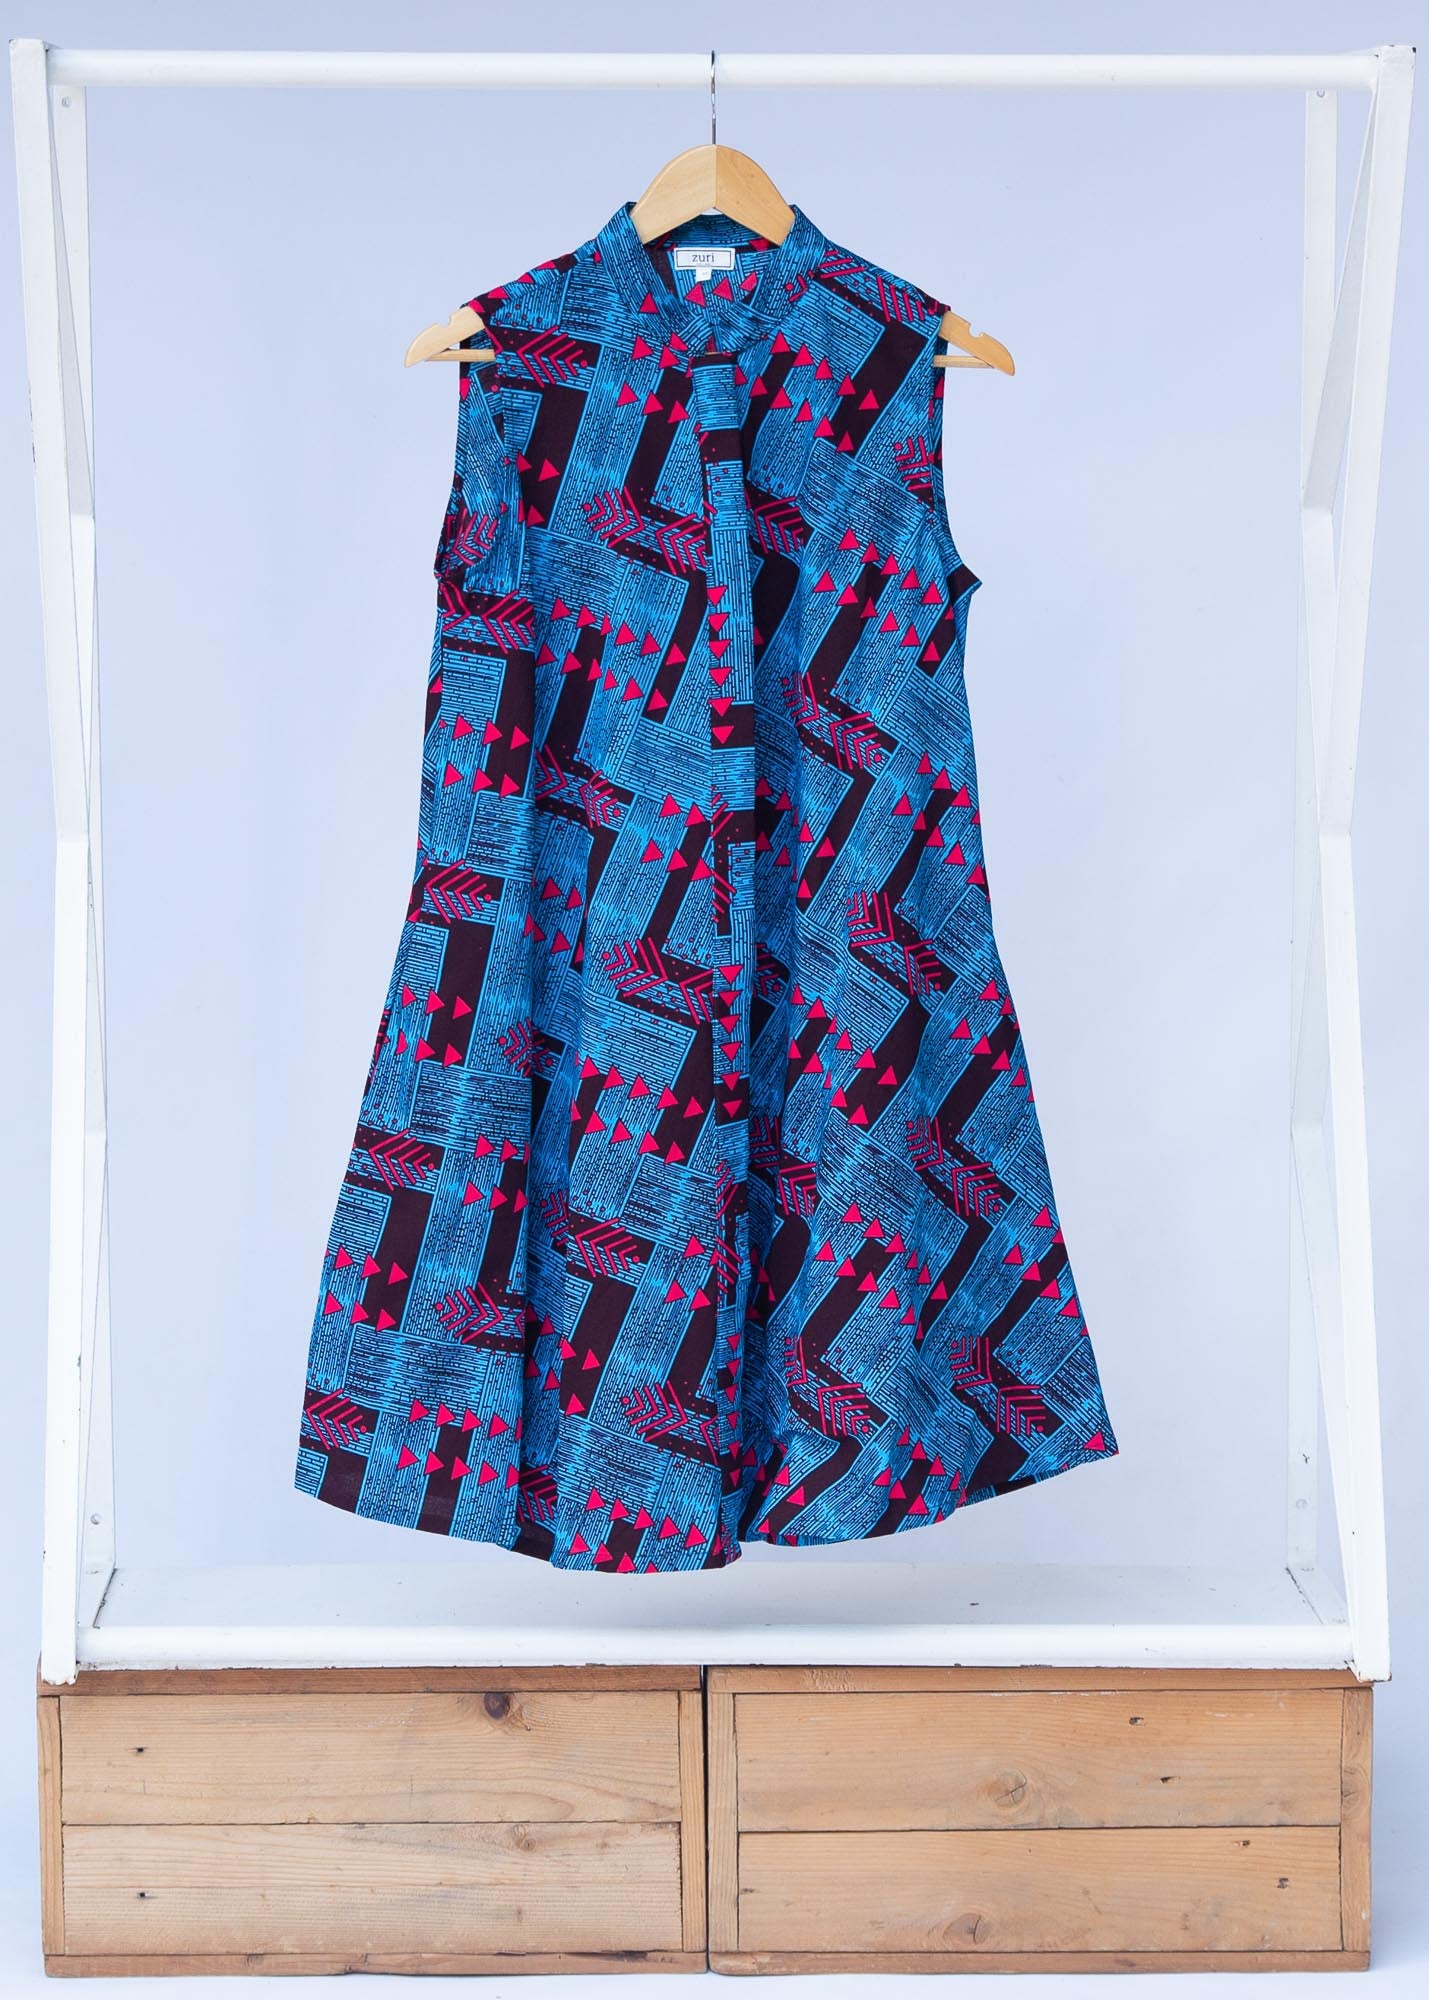 Display of black, blue and hot pink geometric print dress